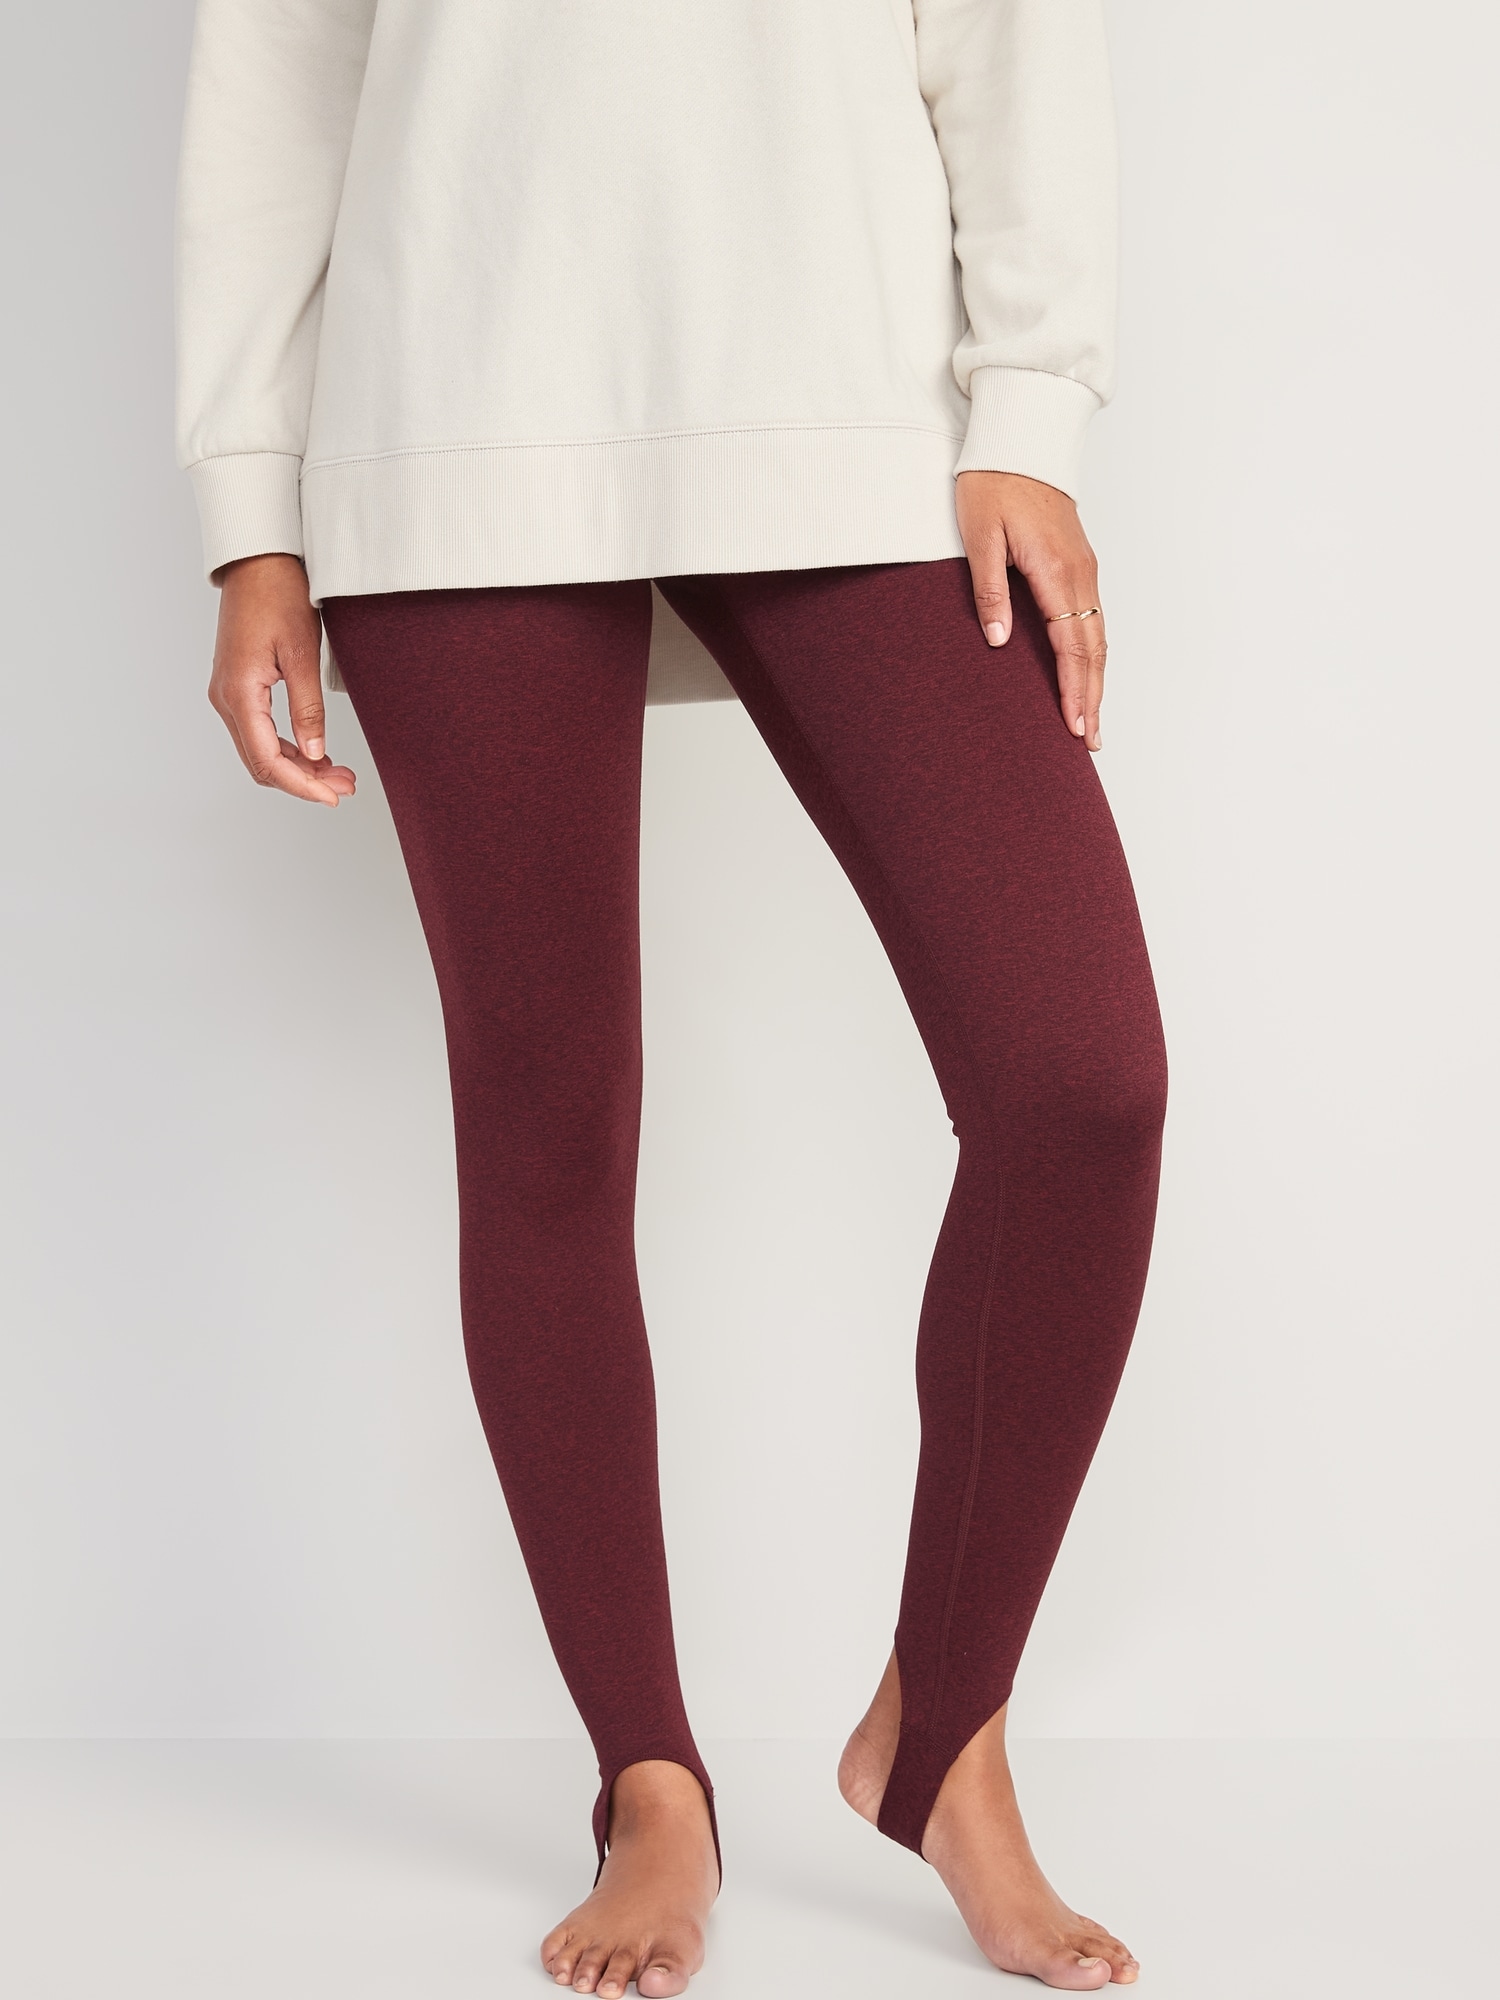 J Jill Pima cotton ankle leggings in burgundy size medium